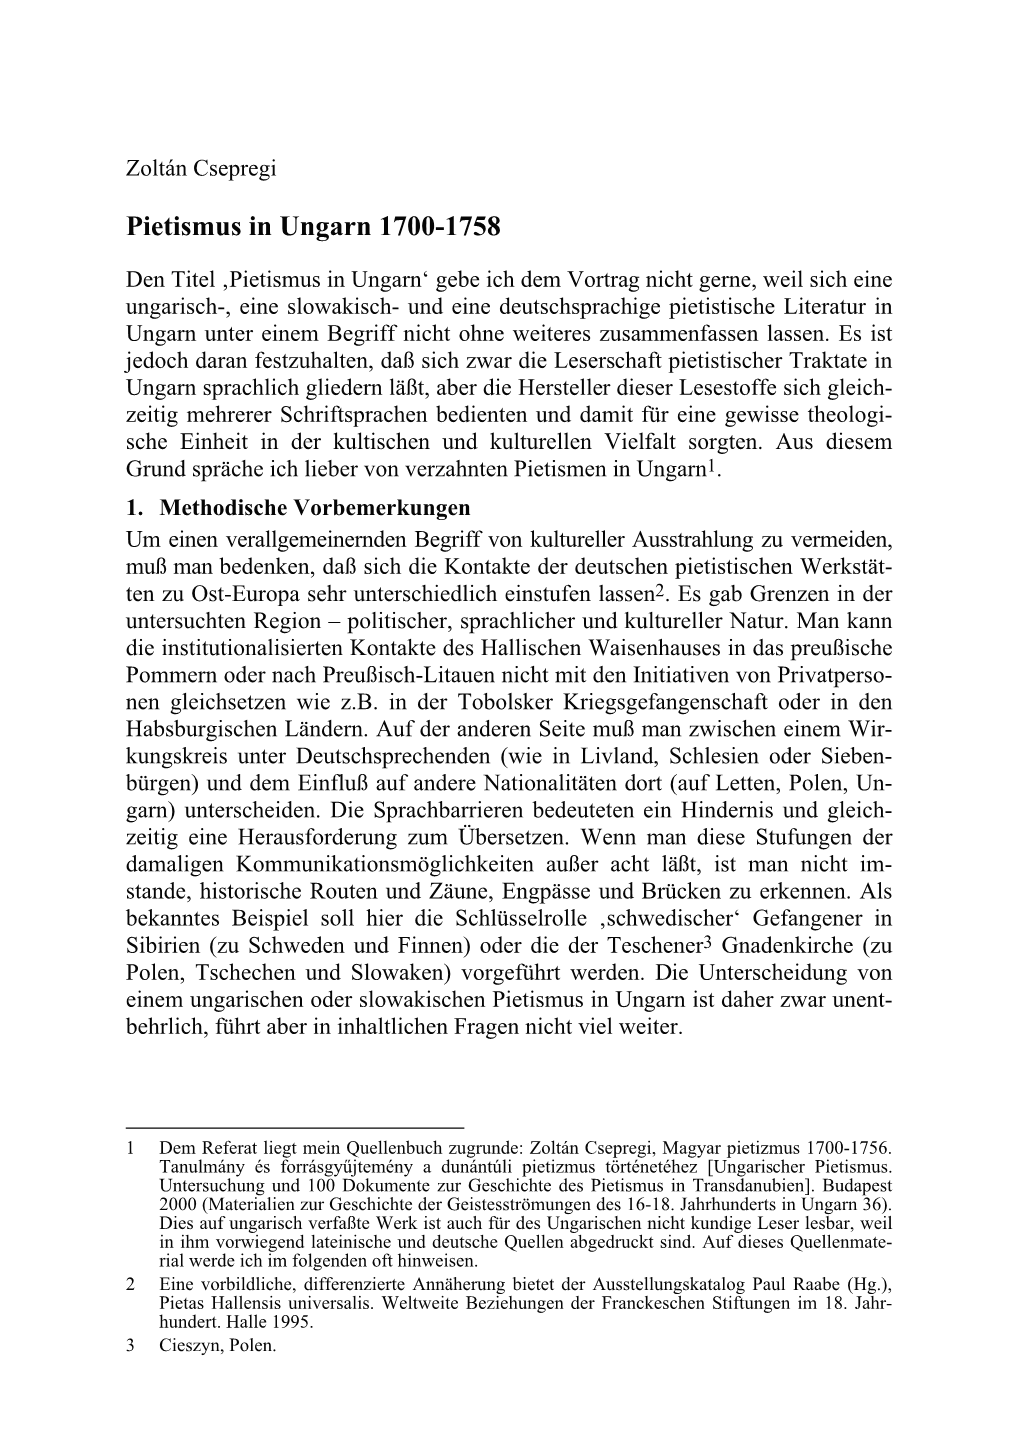 Pietismus in Ungarn 1700-1758